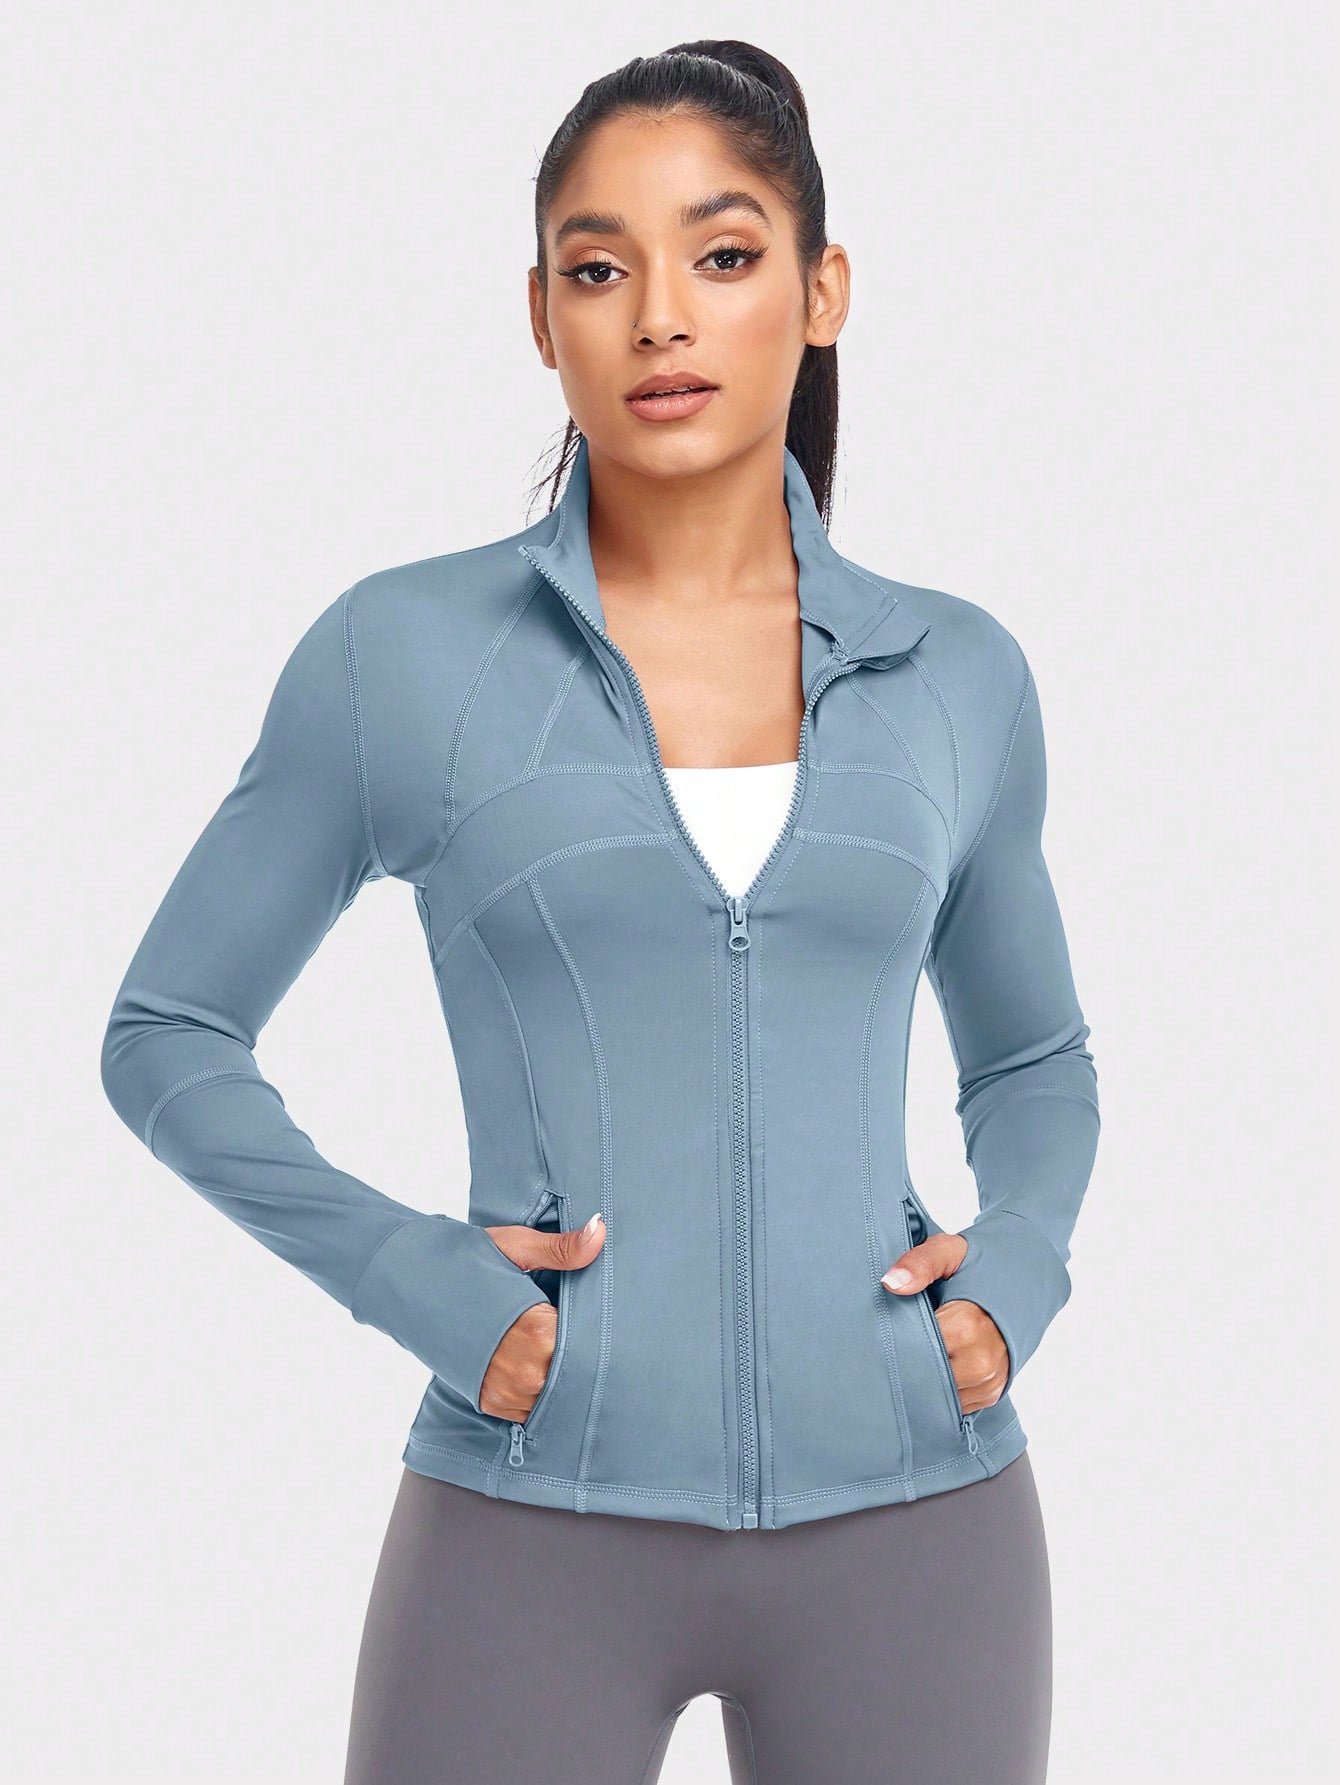 Women's Athletic Sports Jacket: Dual Zip Pockets & Thumb Hole Design